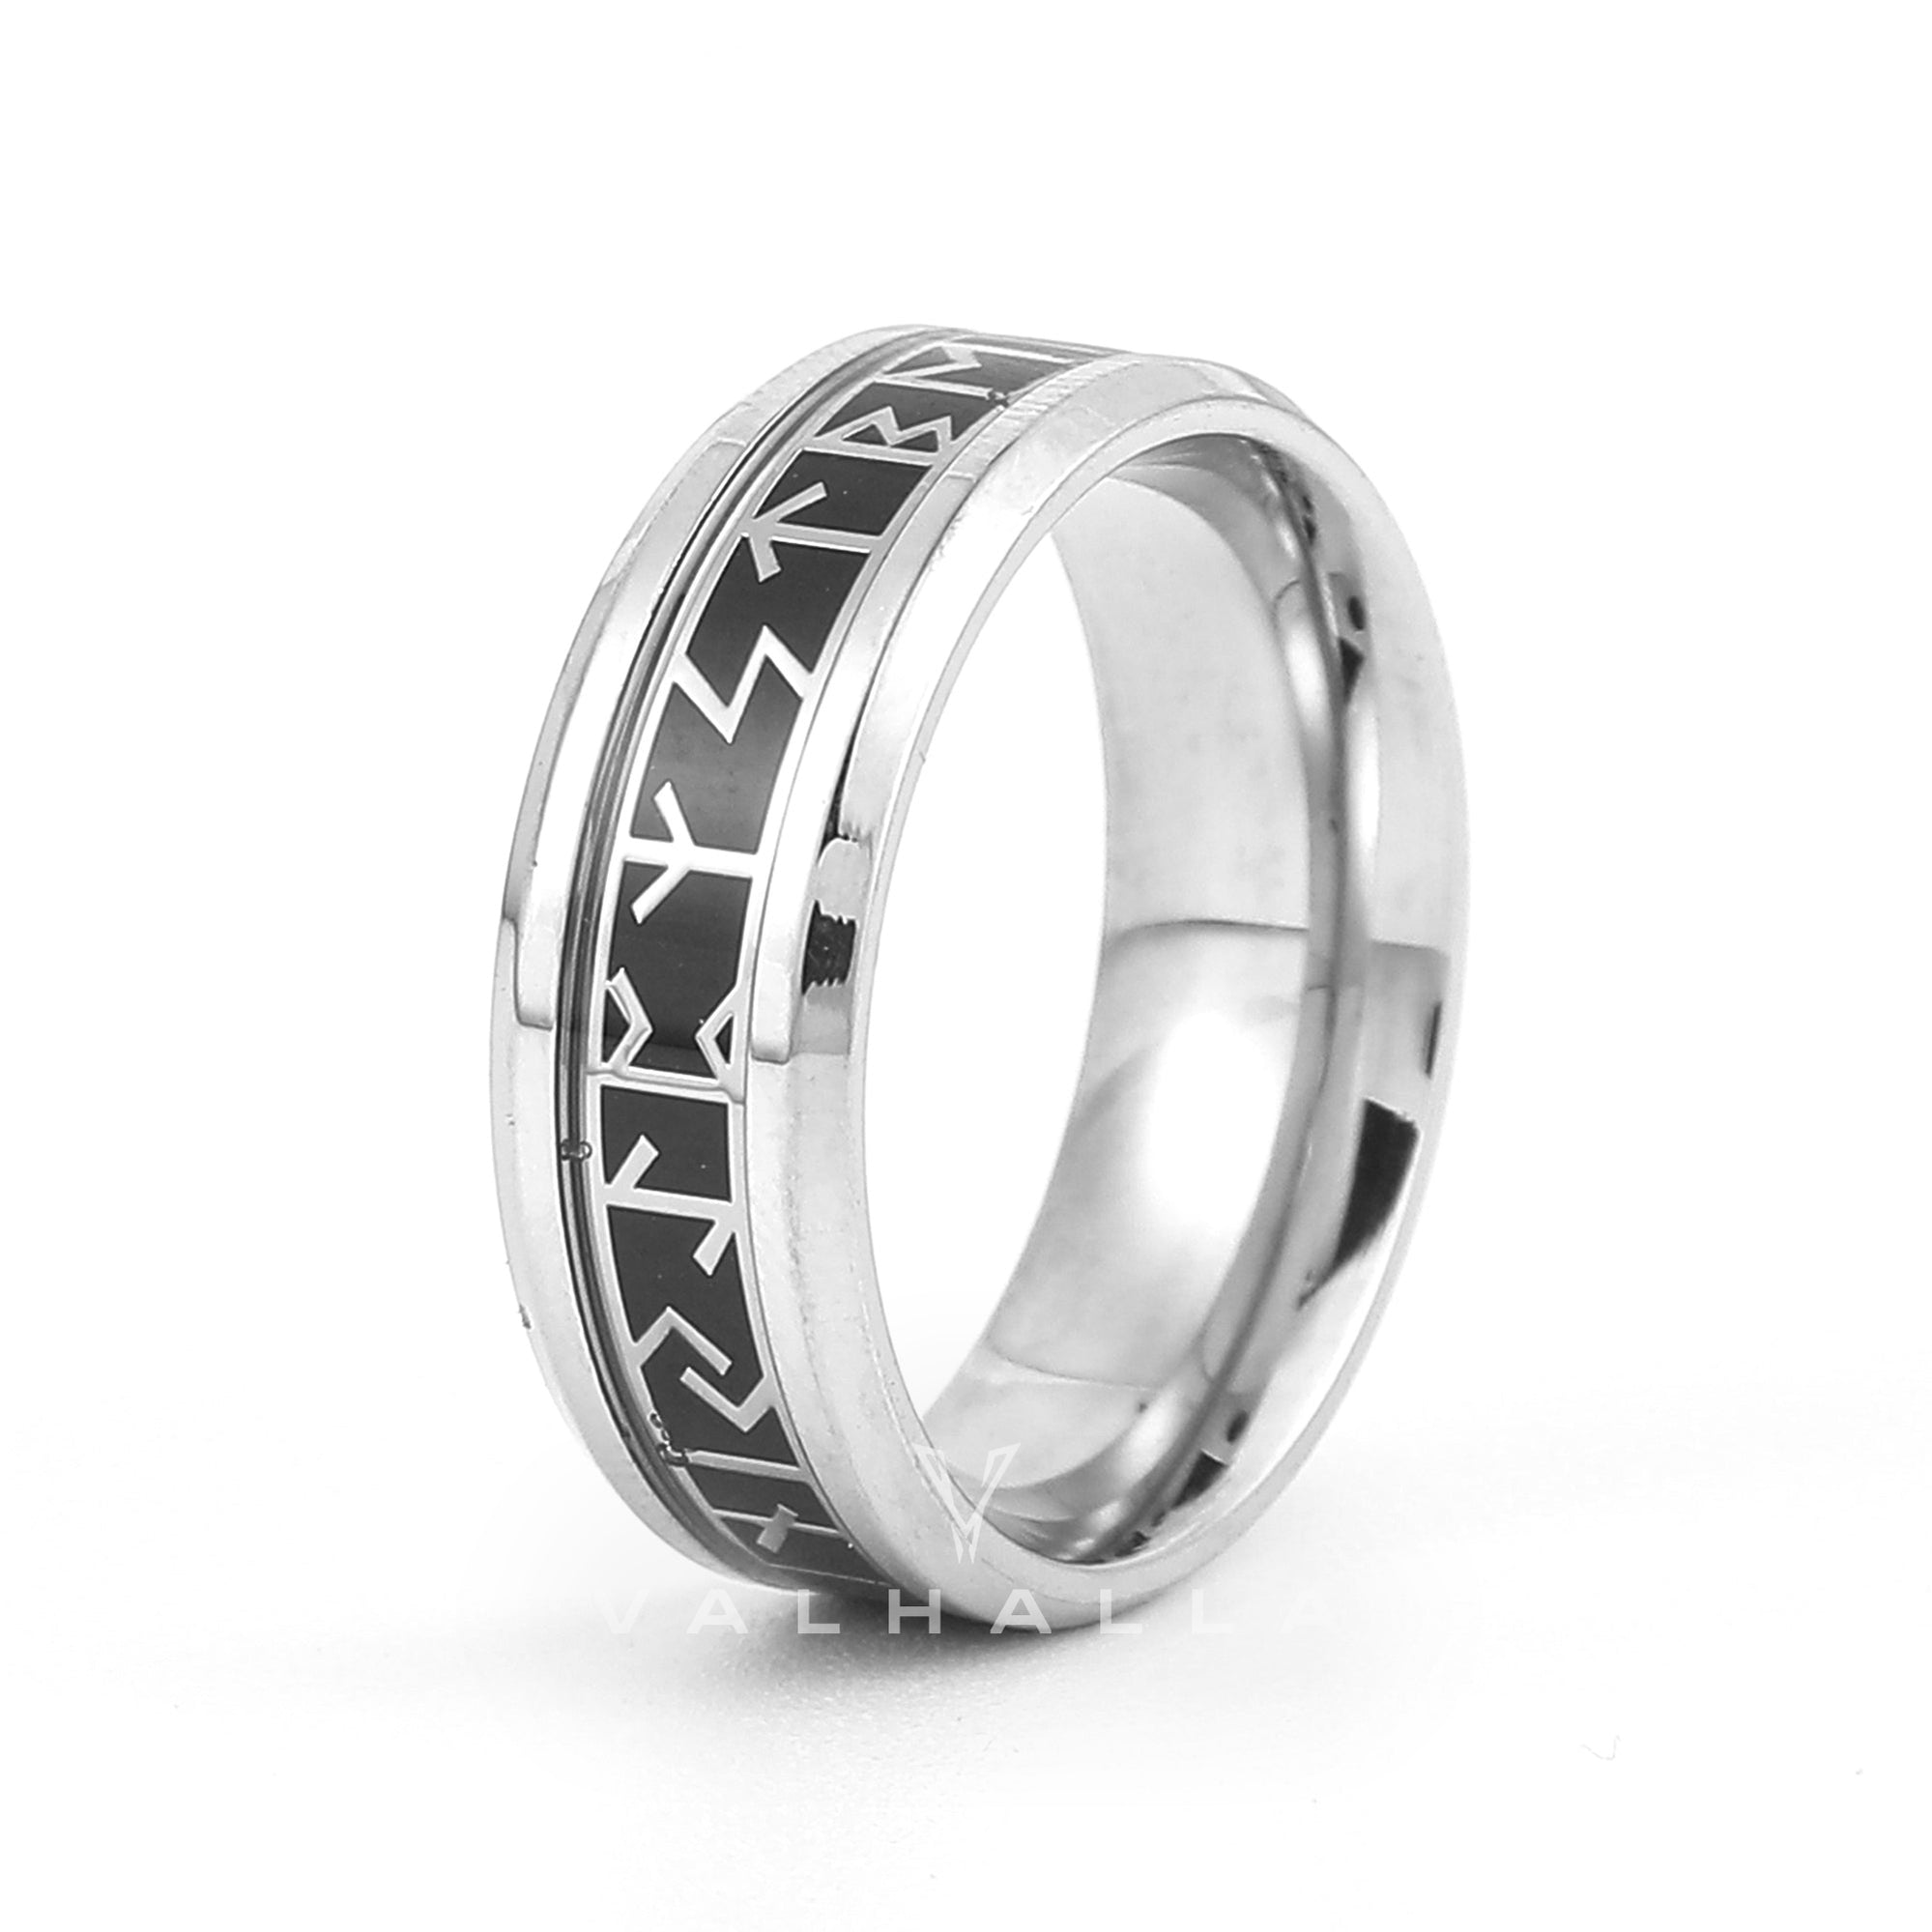 Handcrafted Stainless Steel Viking Elder Futhark Rune Ring